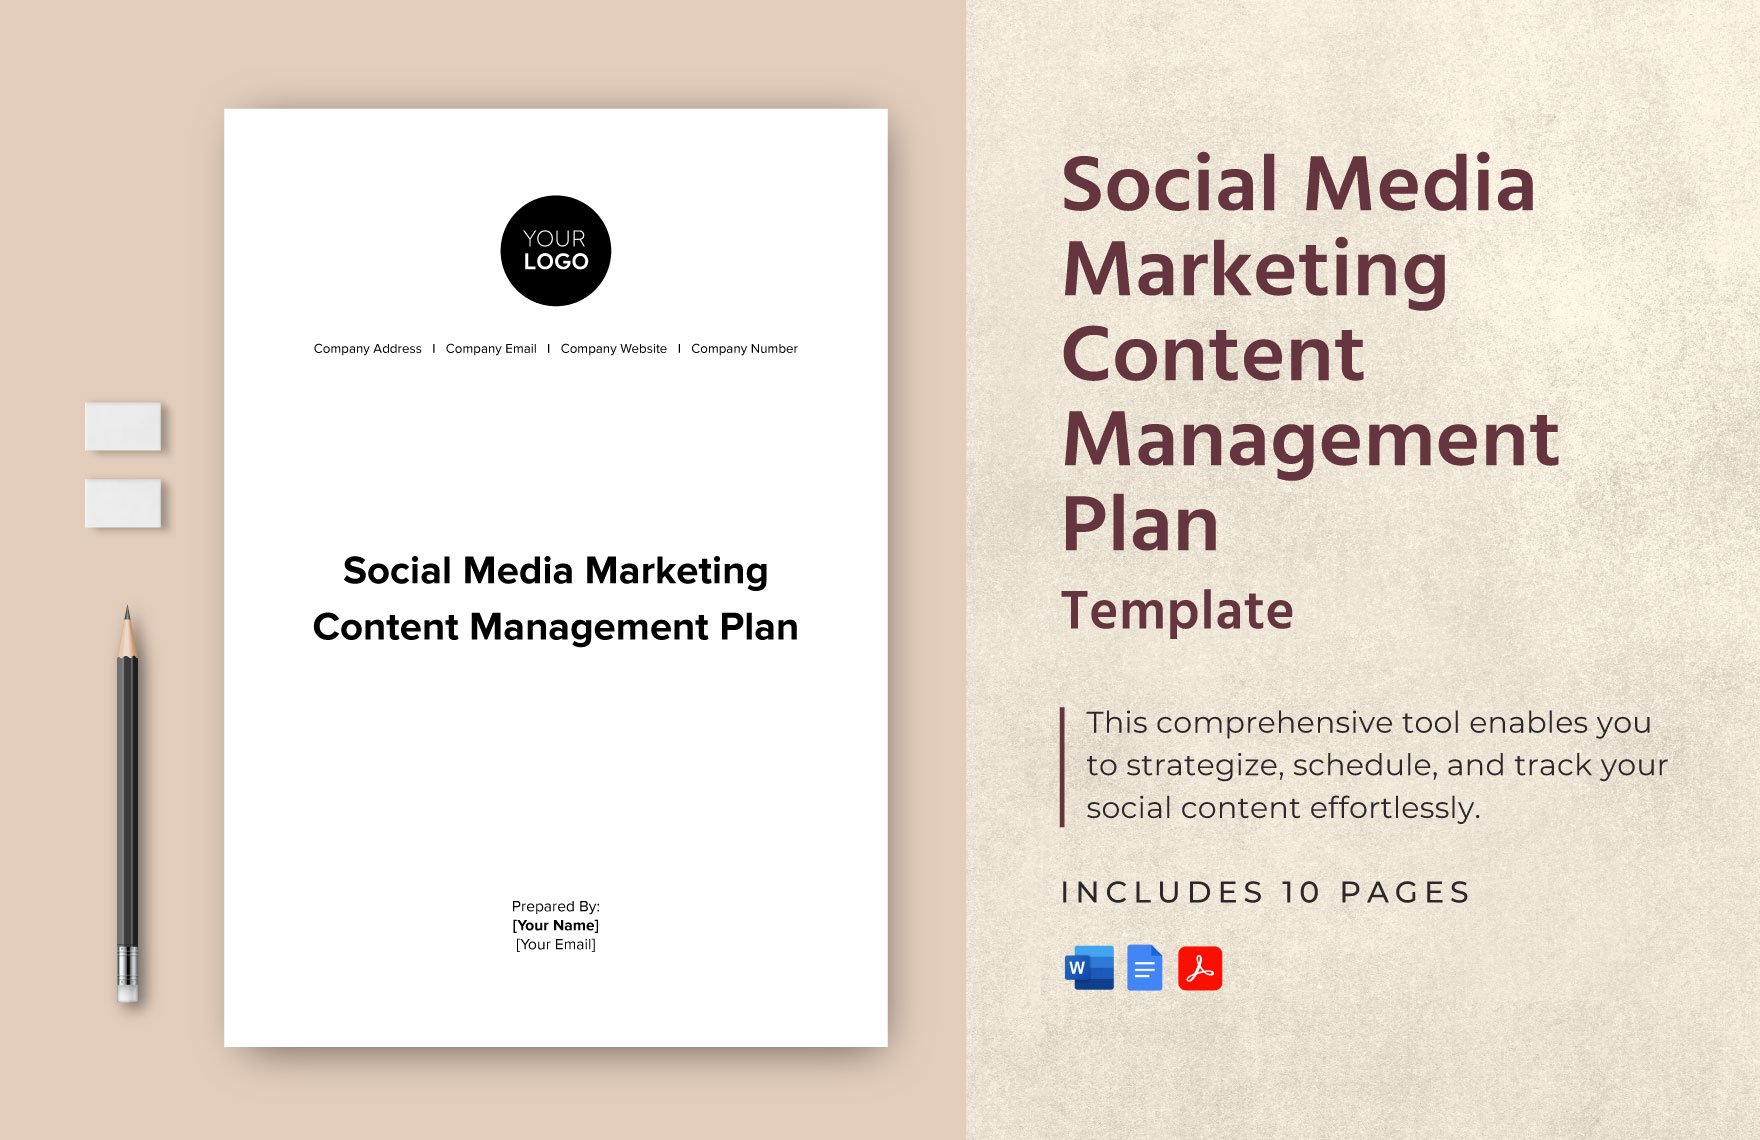 Social Media Marketing Content Management Plan Template